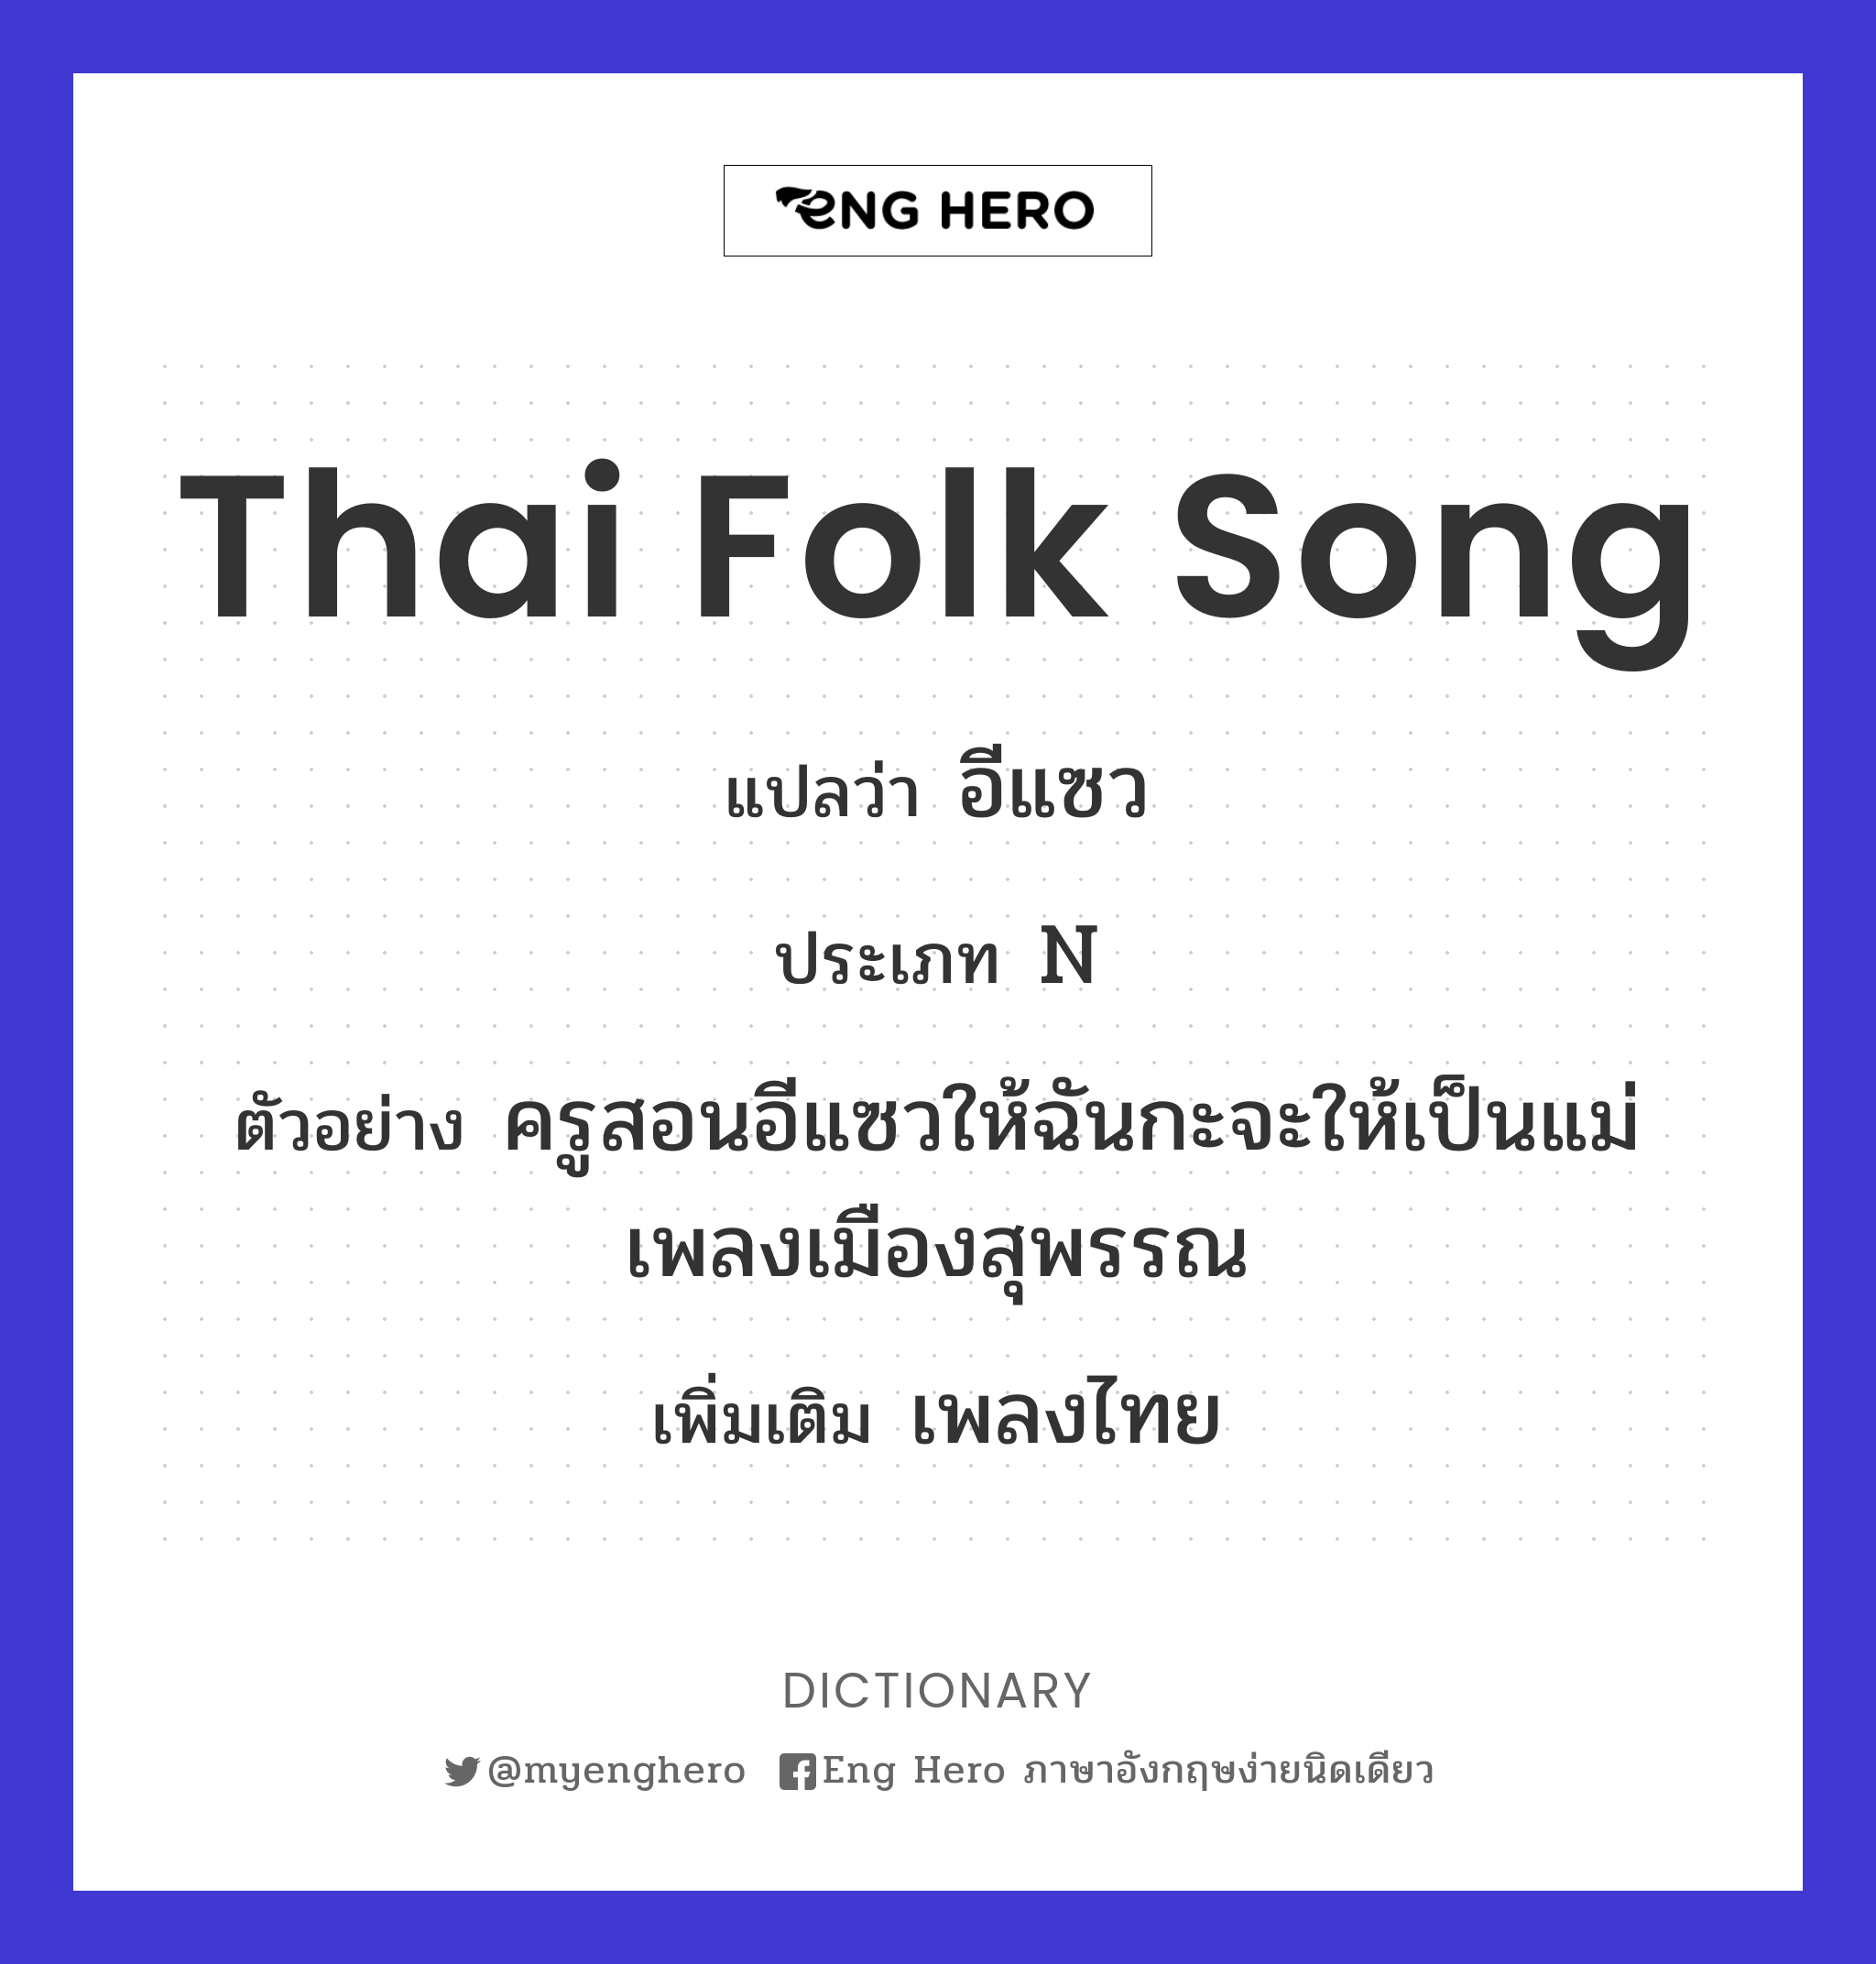 Thai folk song